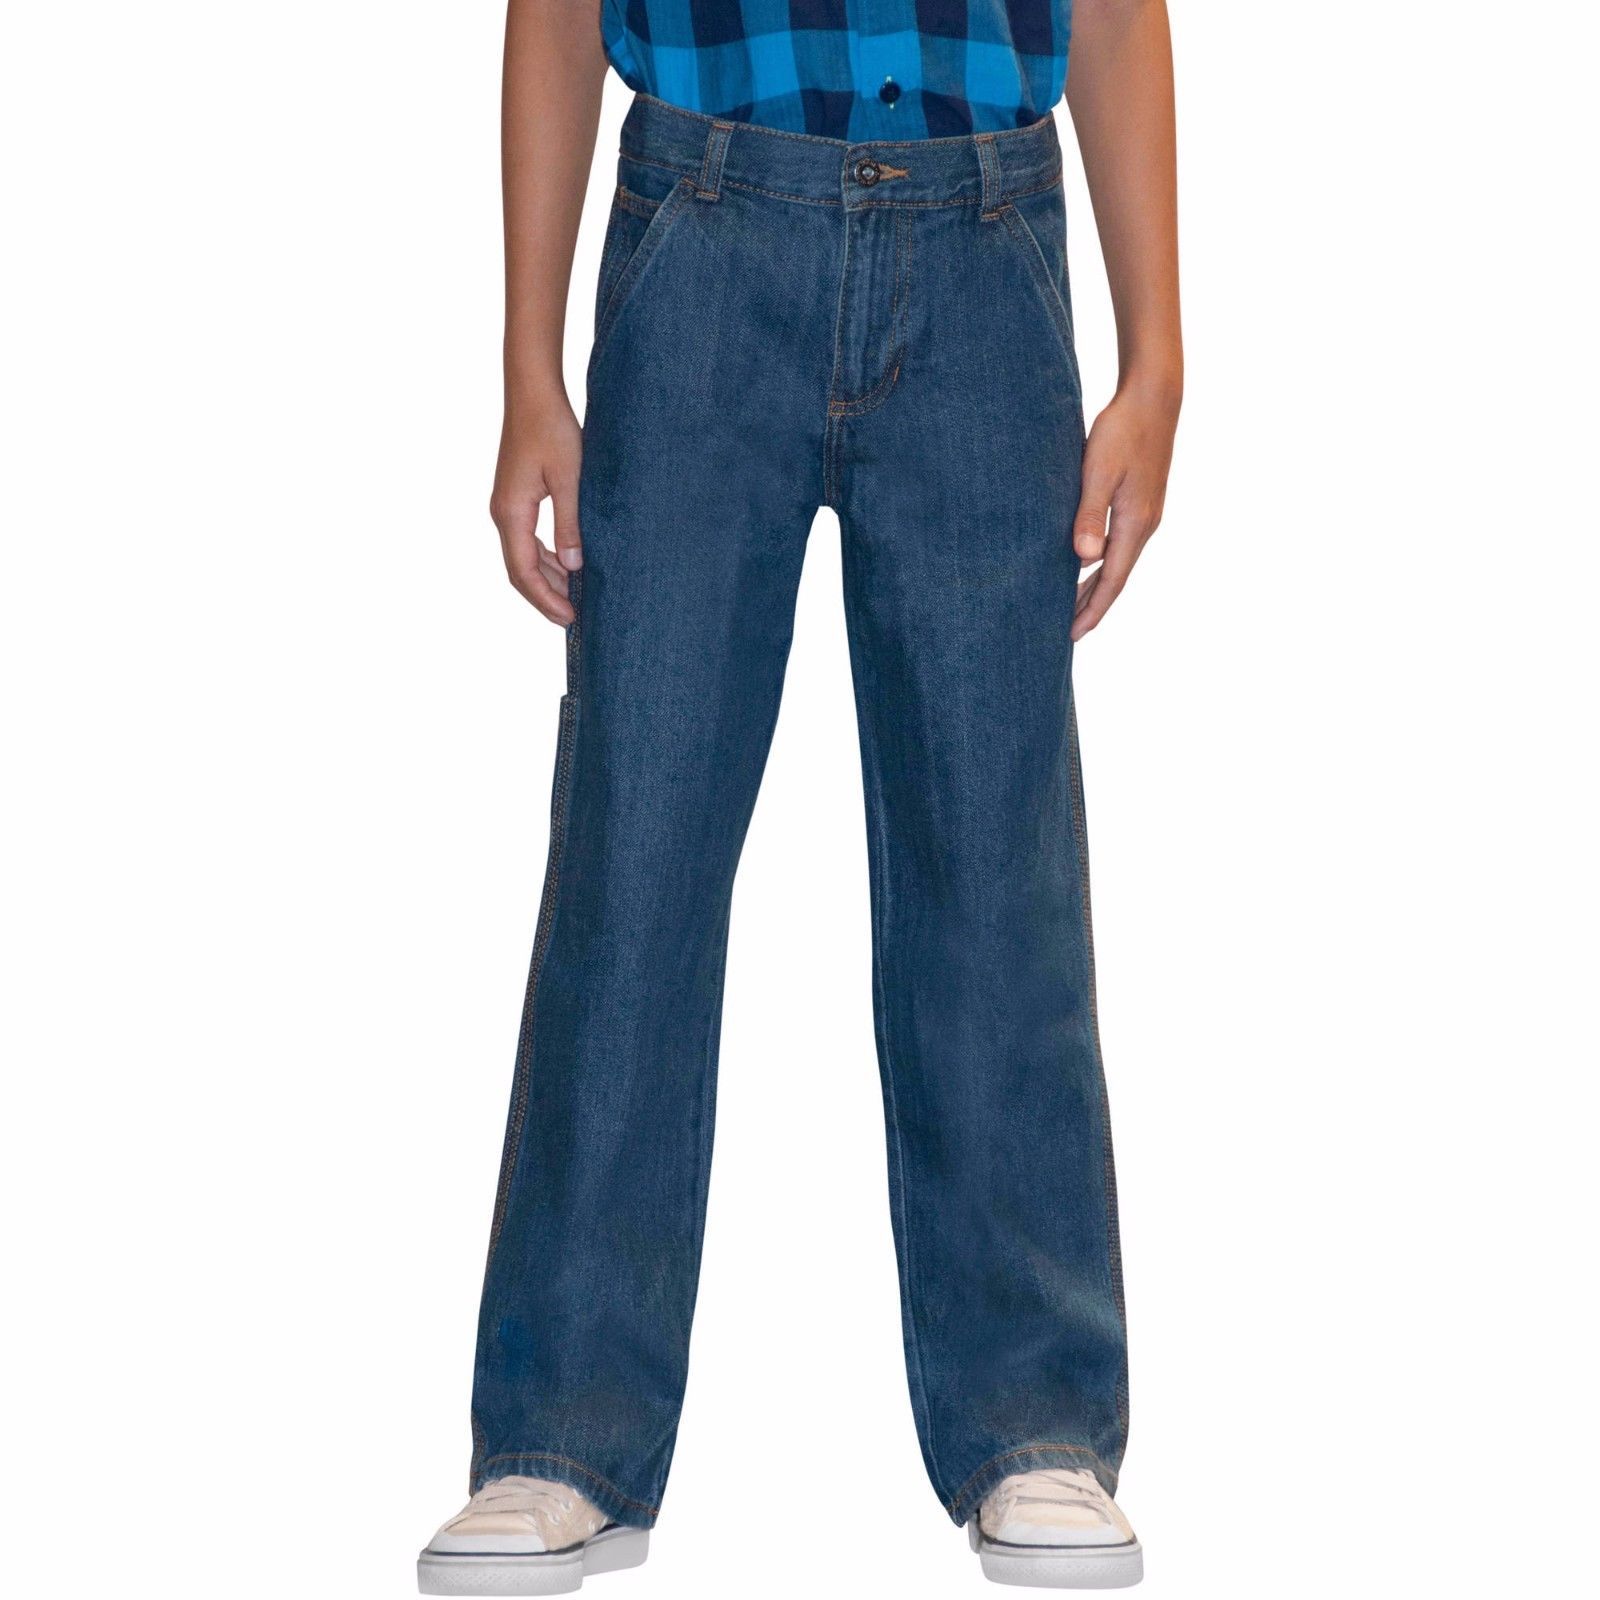 Faded Glory Boys Carpenter Jeans Medium Wash Size 6 Regular NEW - $12.86